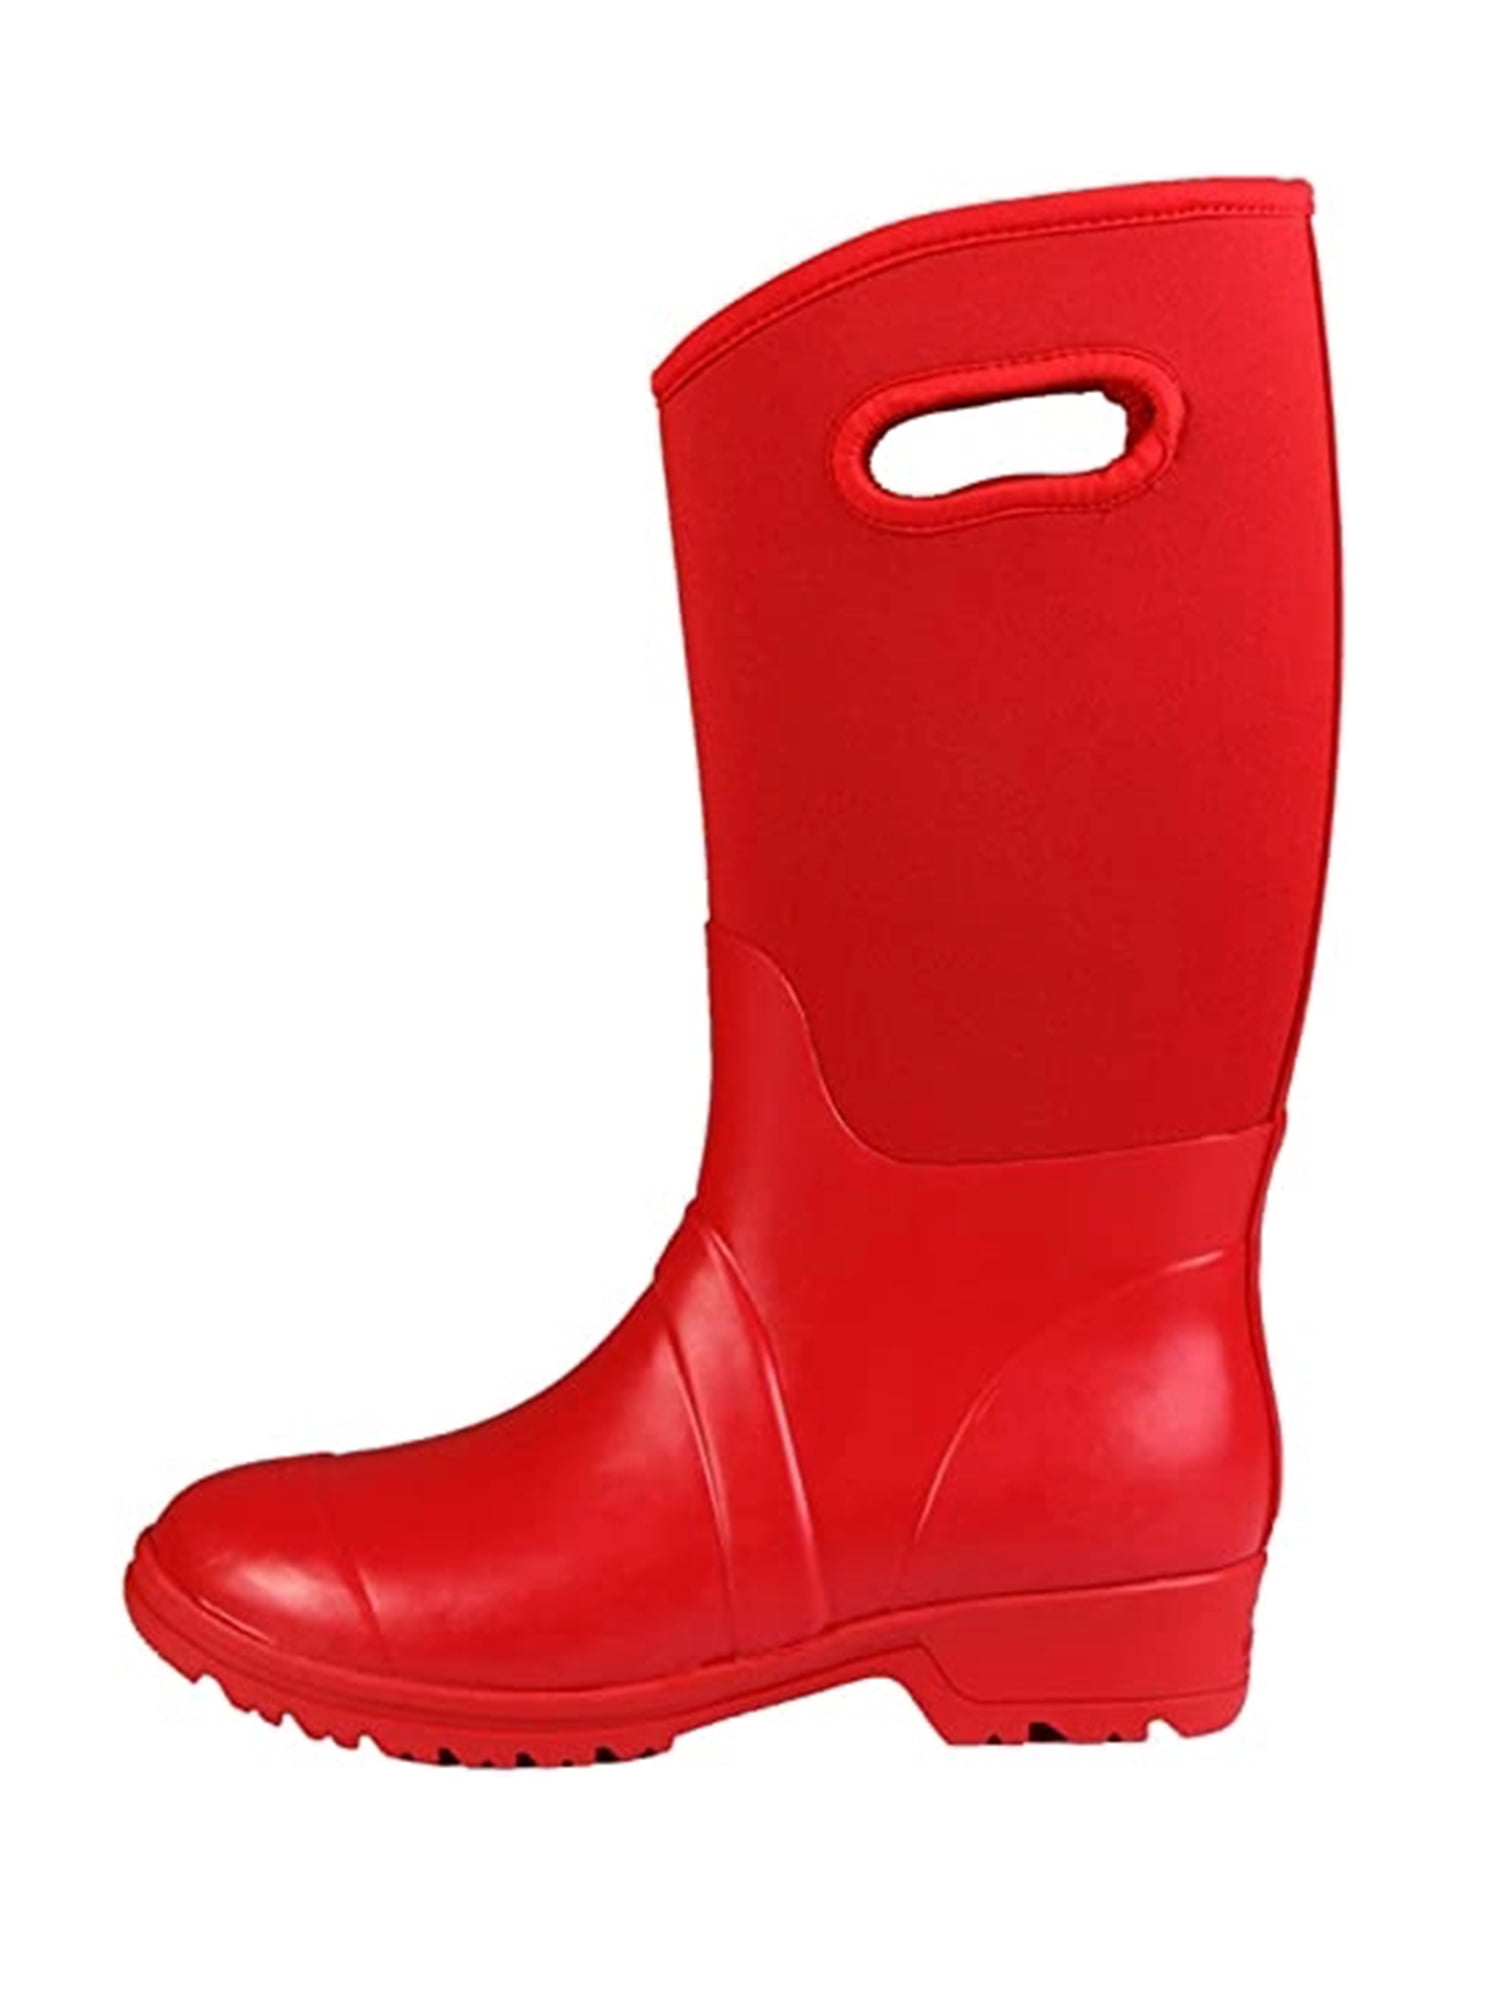 Tanleewa - Slip-Resistant Women Rain Boots Fashion Neoprene Waterproof ...